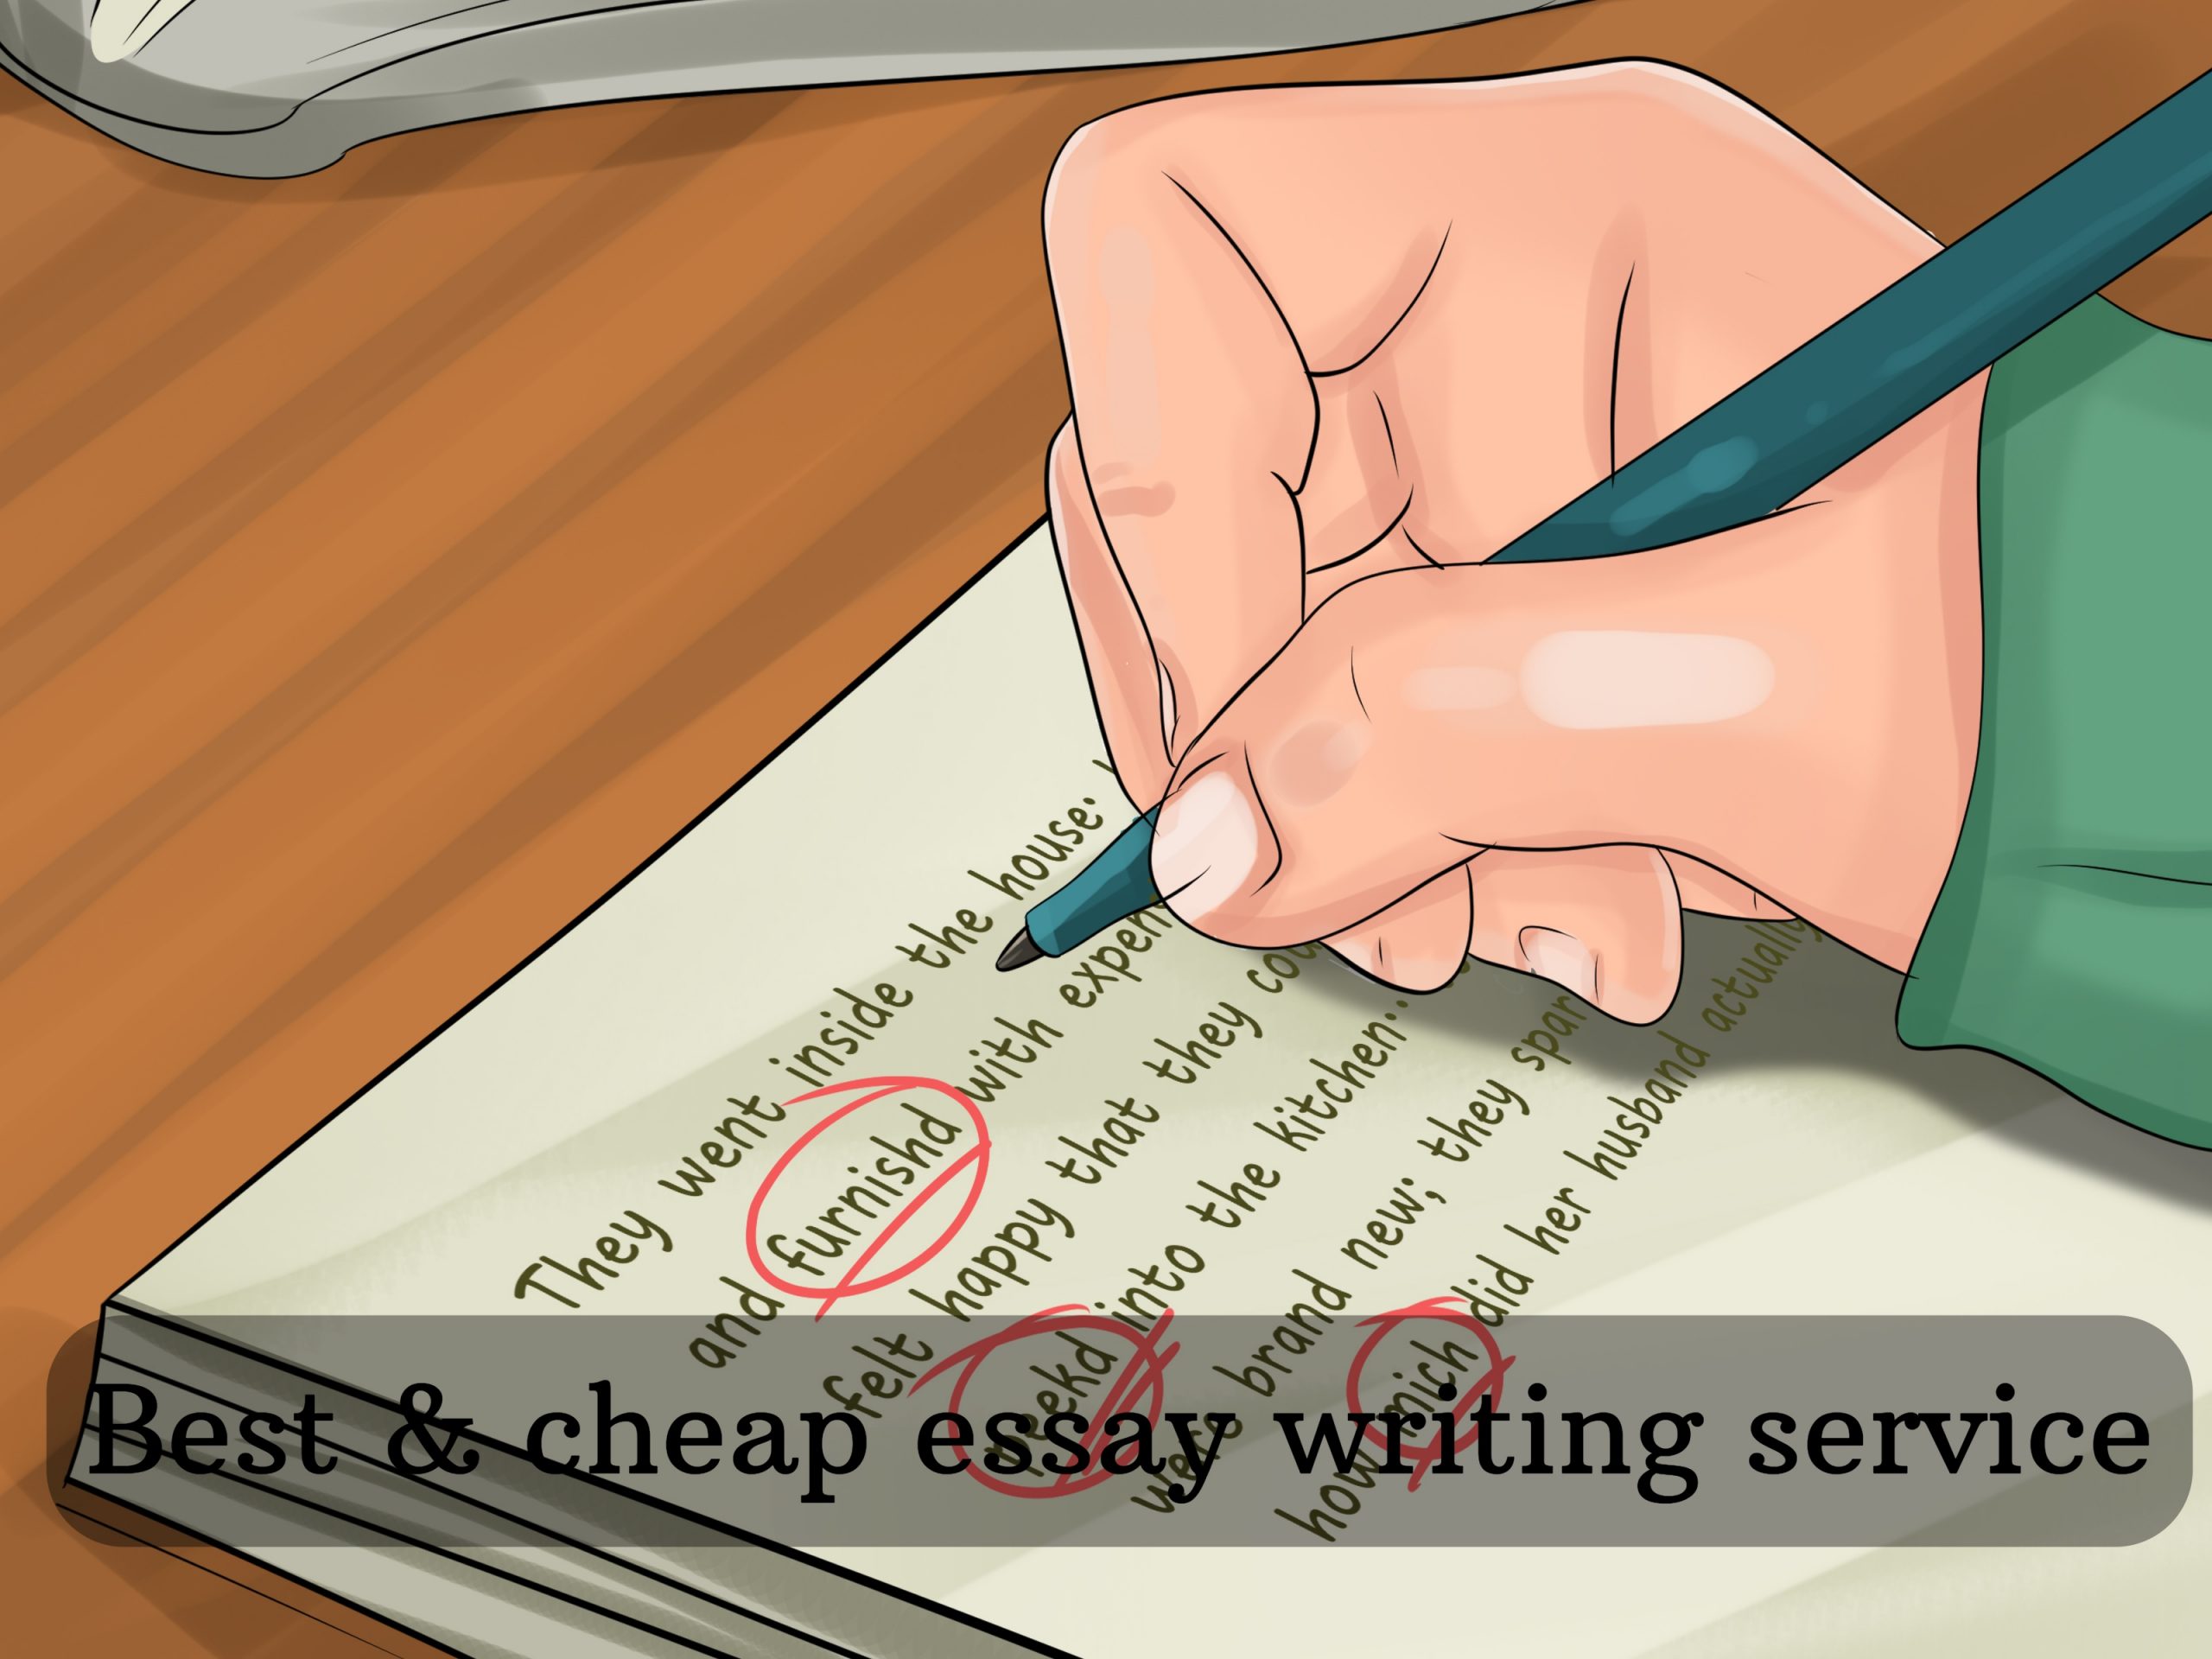 Best & cheap essay writing service